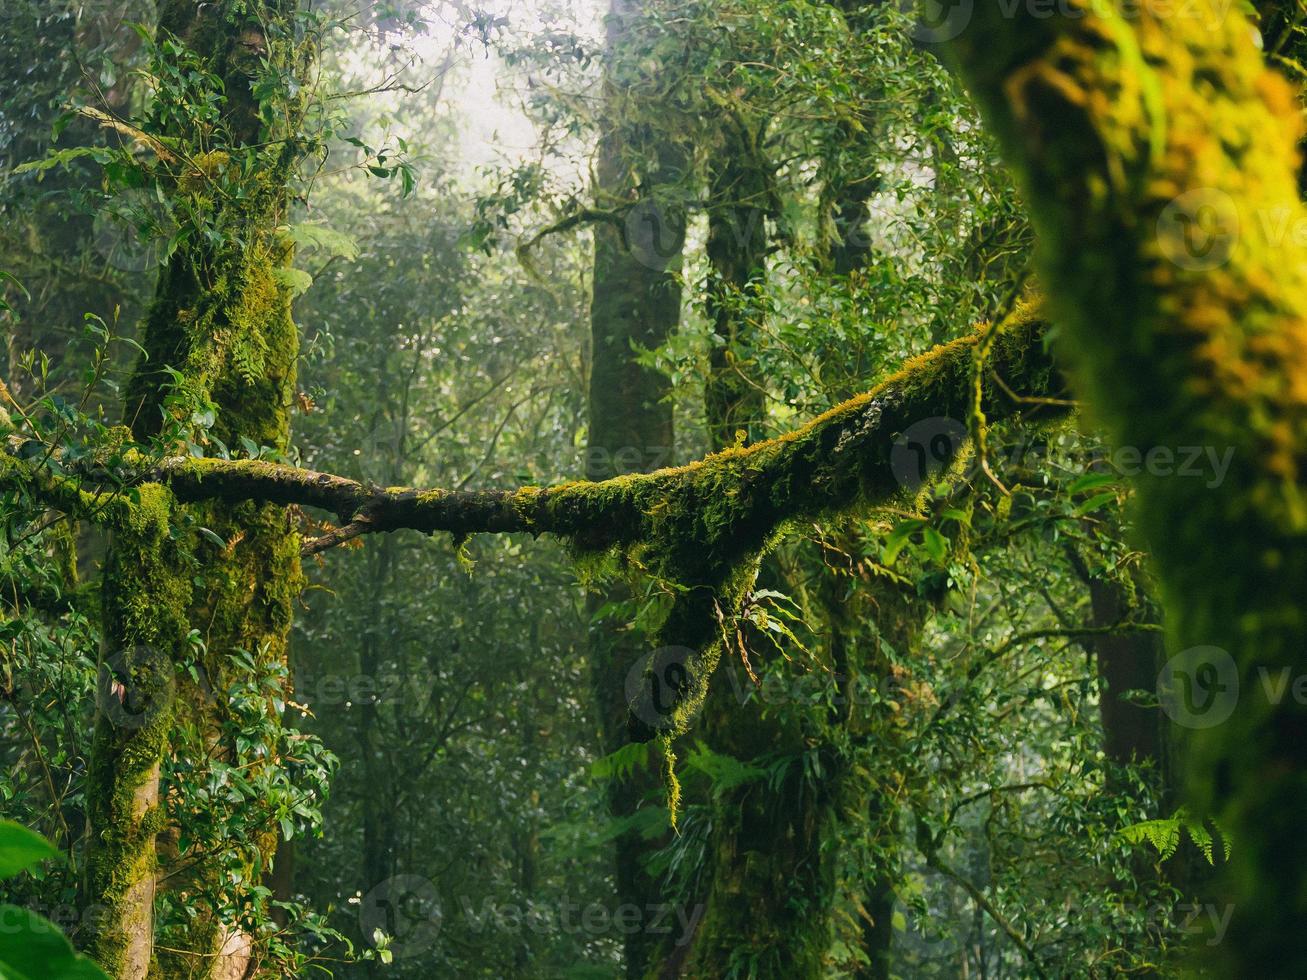 Regenwald im Nationalpark Doi Inthanon, Thailand foto